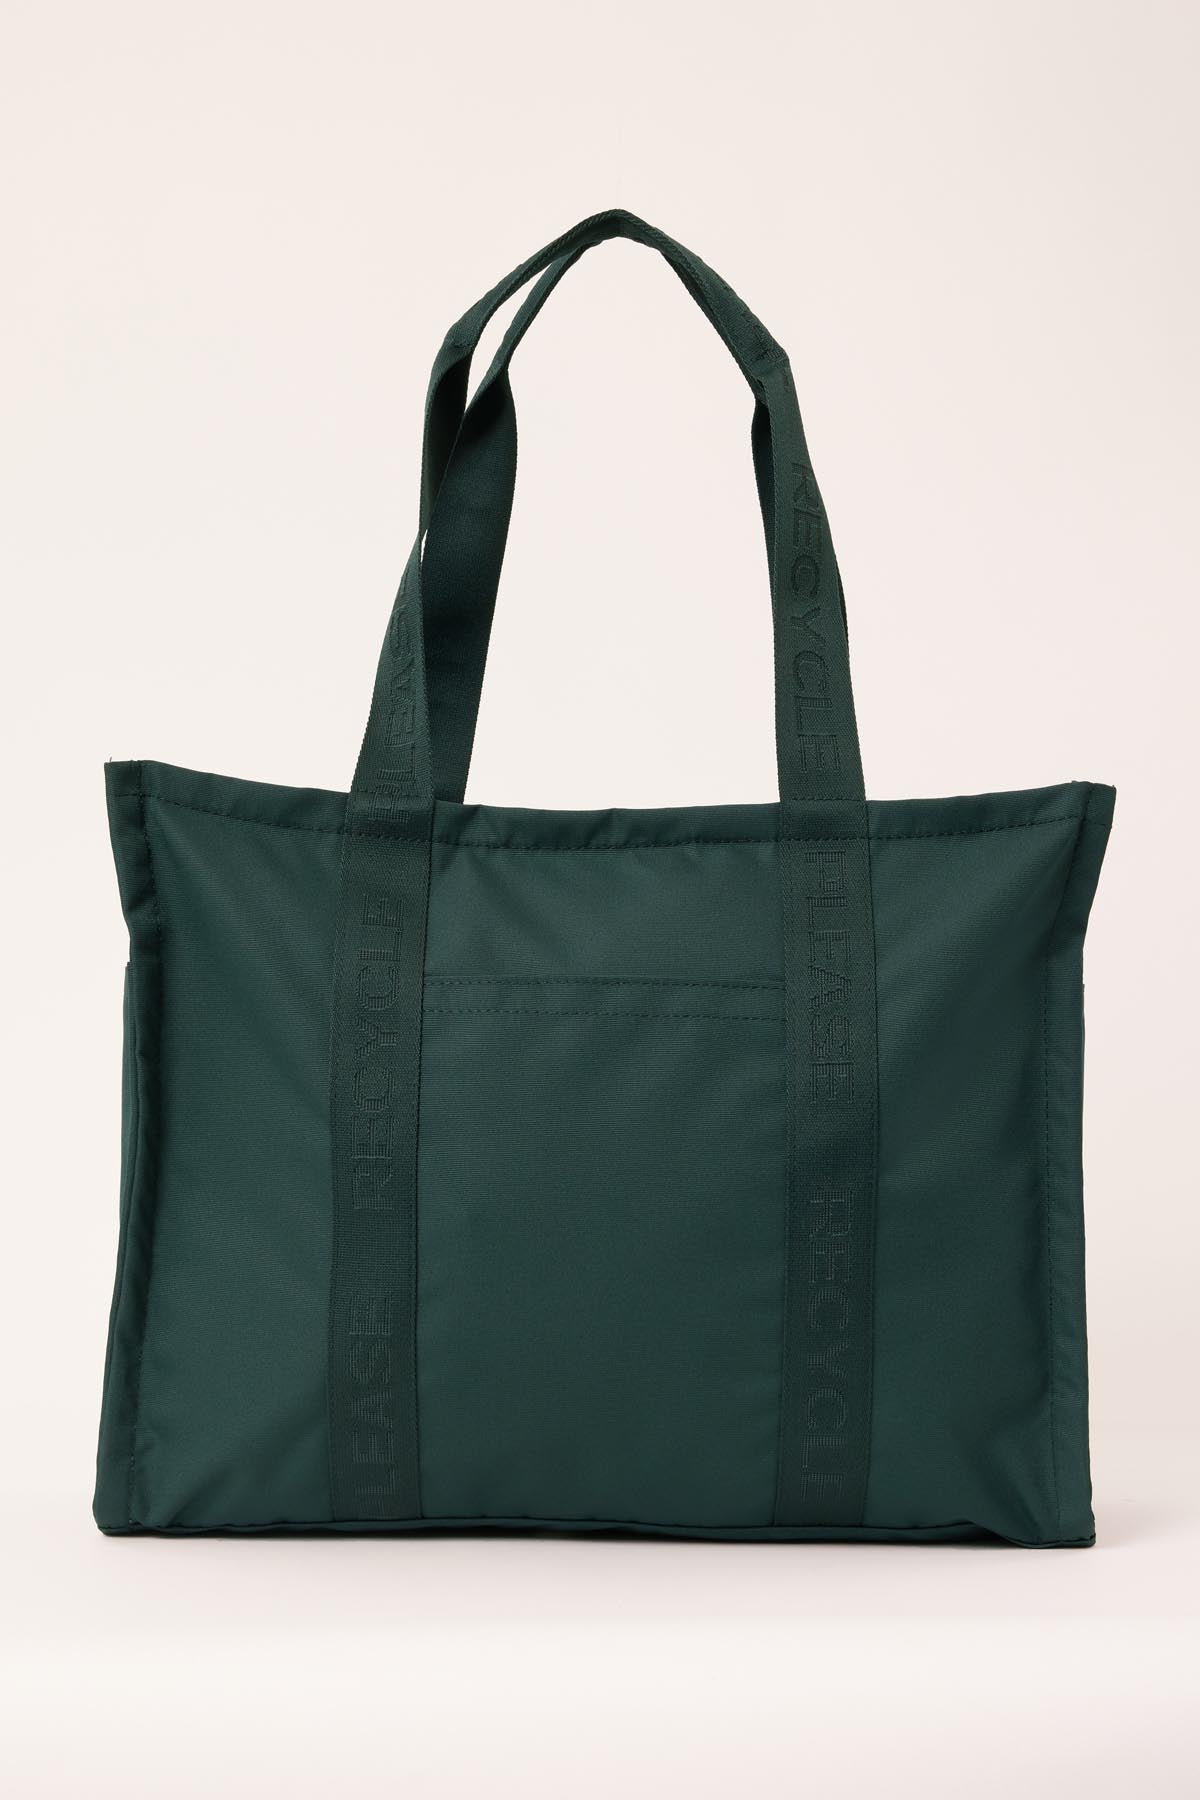 Buy Sweaty Betty Gym Bags & Duffle bags online - Women - 2 products